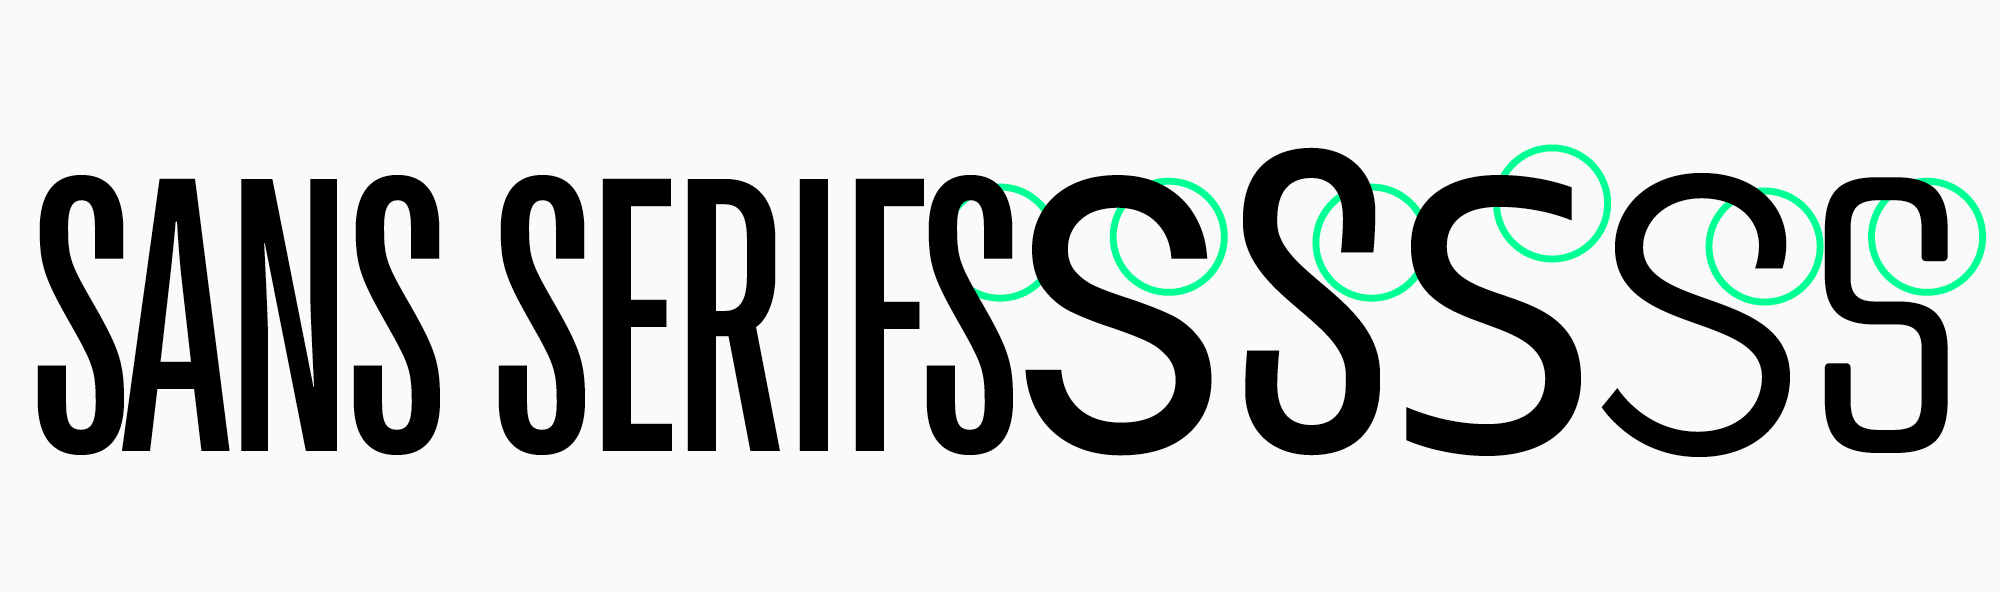 15 Best SansSerif Fonts Popular Among Professional Graphic Designers